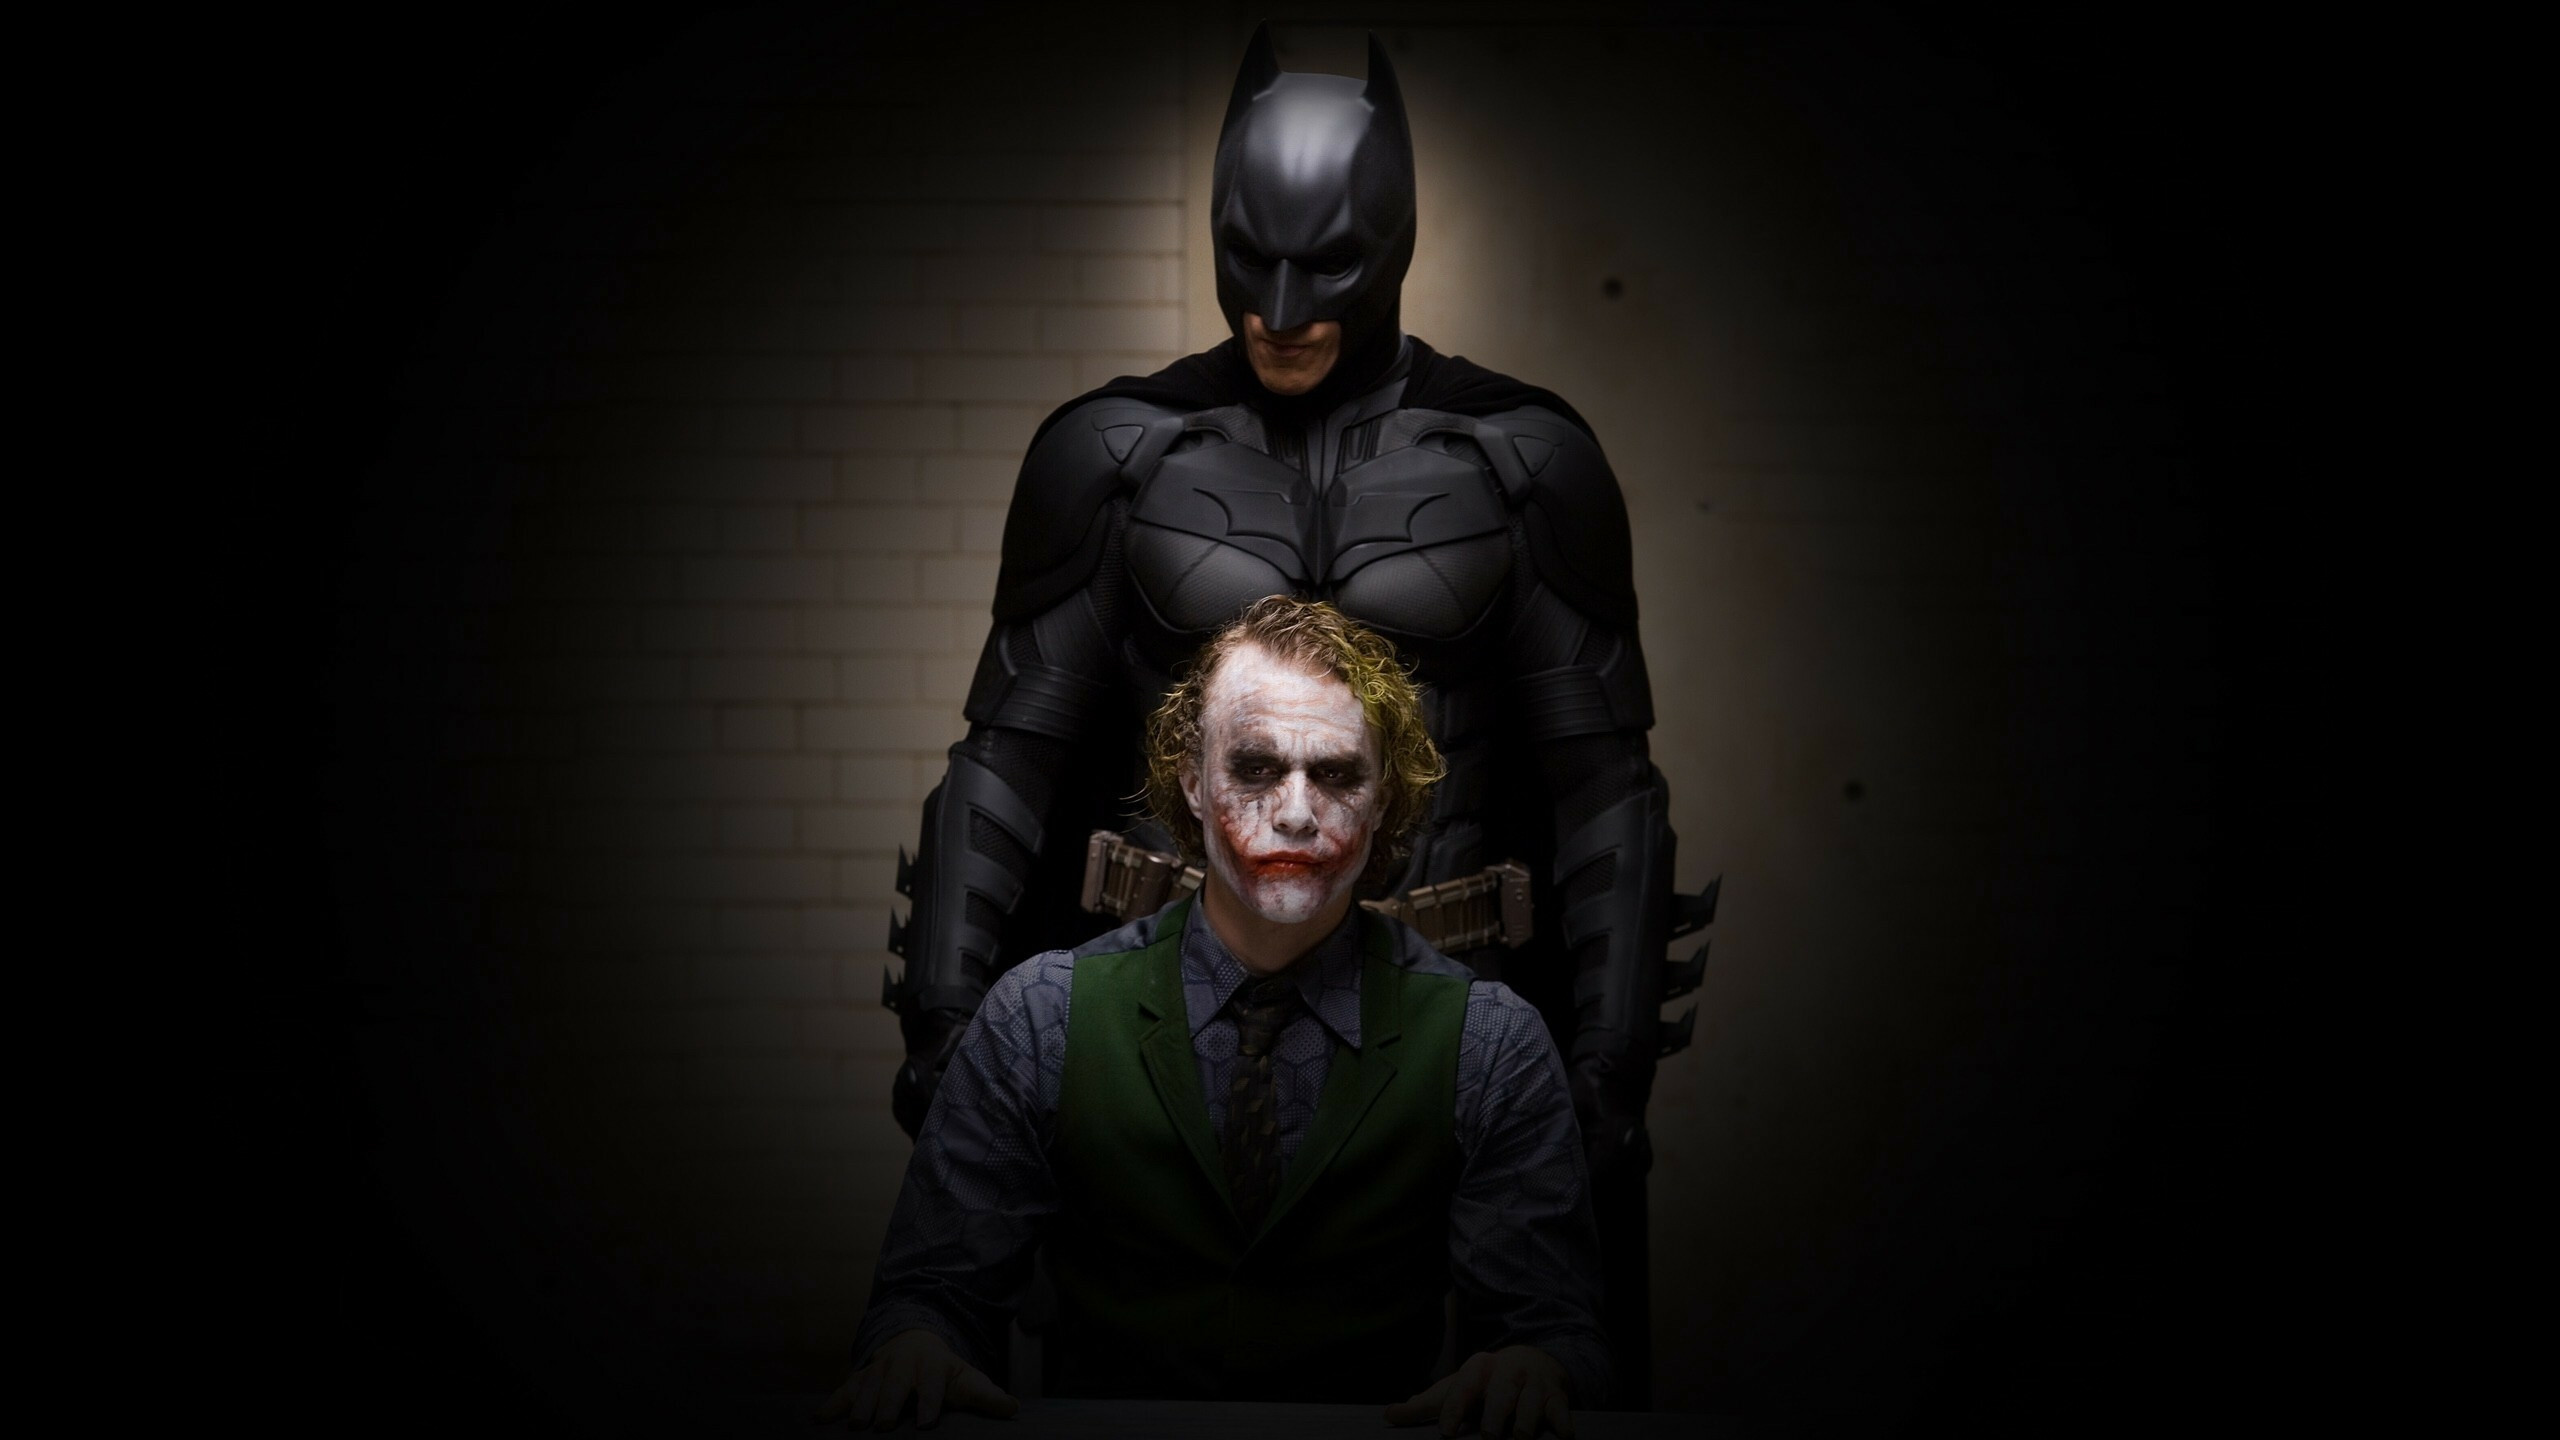 The Dark Knight: Christian Bale as Bruce Wayne / Batman, Heath Ledger as the Joker. 2560x1440 HD Wallpaper.